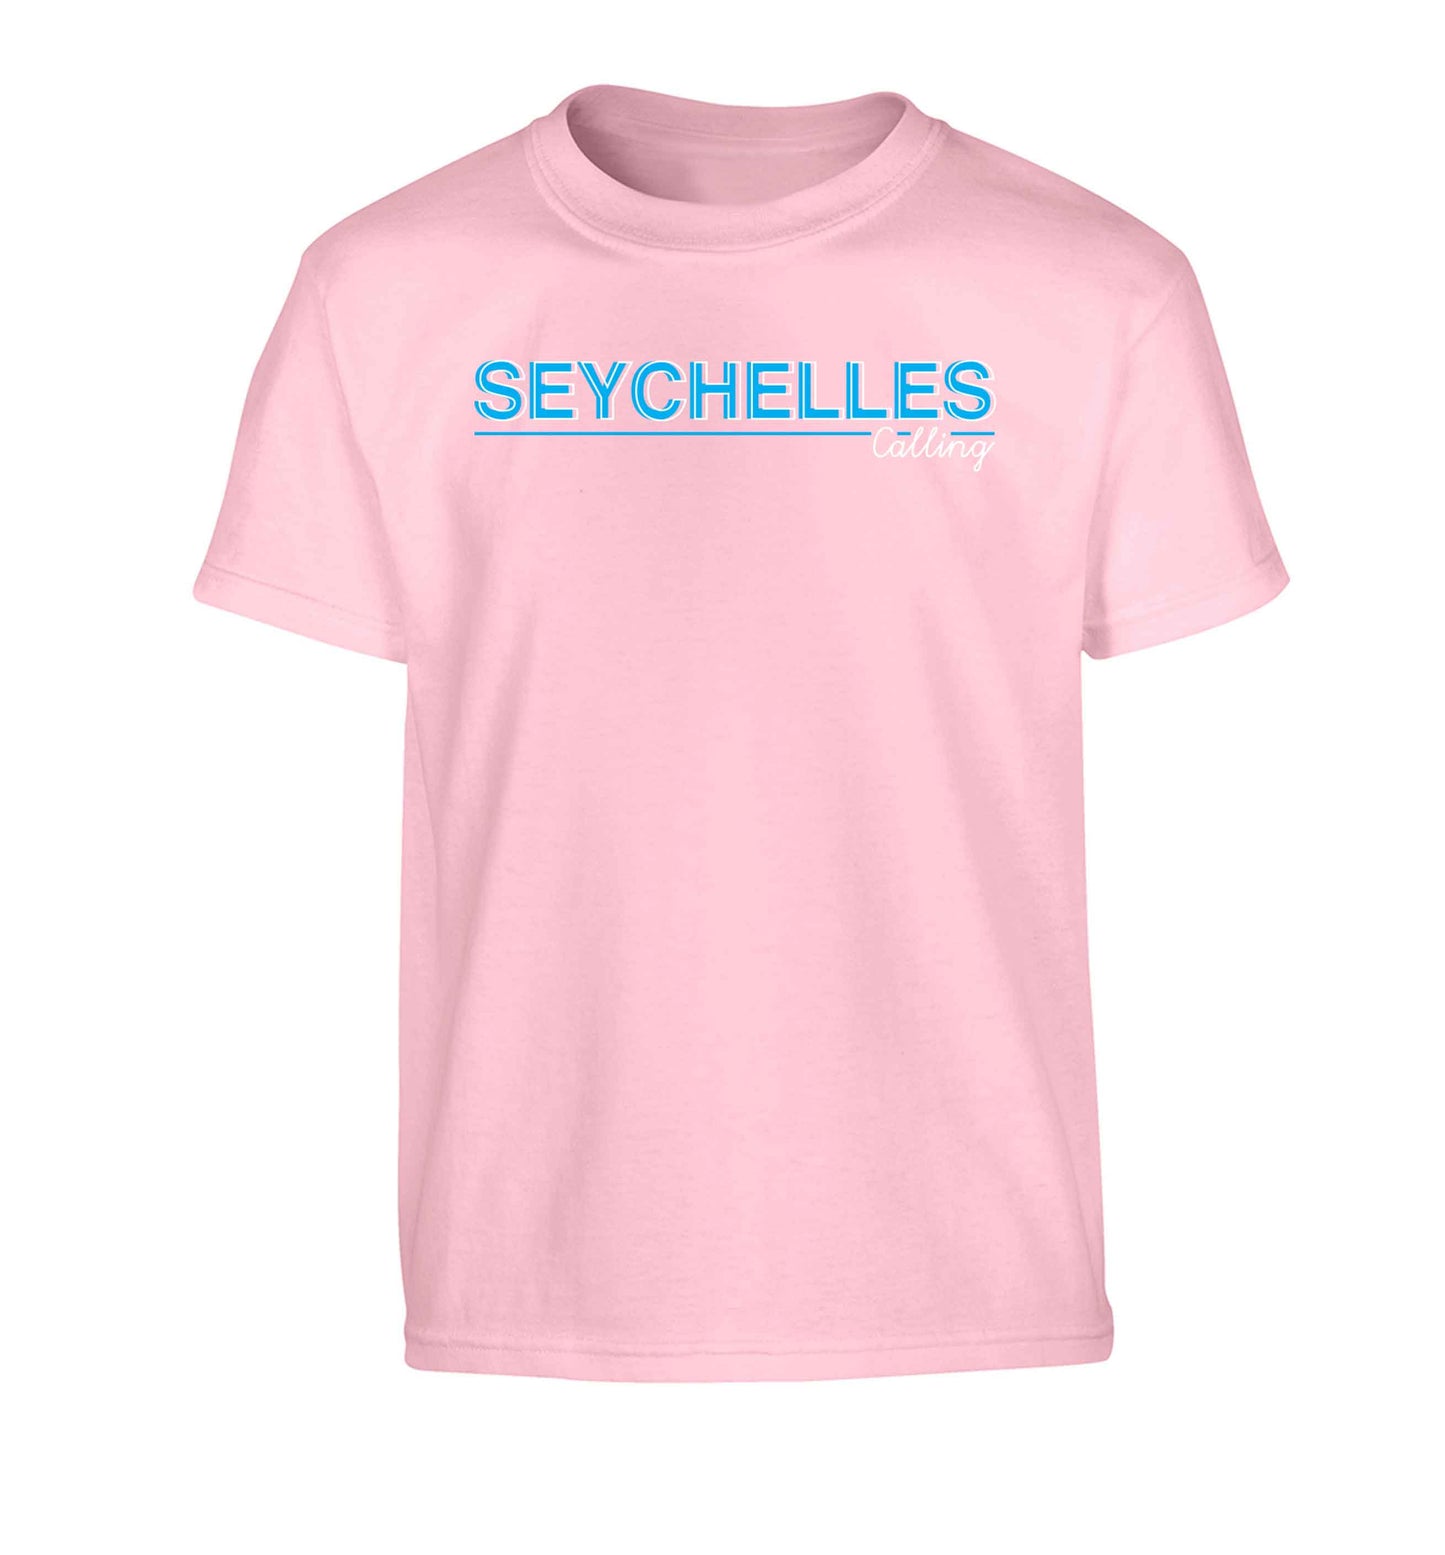 Seychelles calling Children's light pink Tshirt 12-13 Years